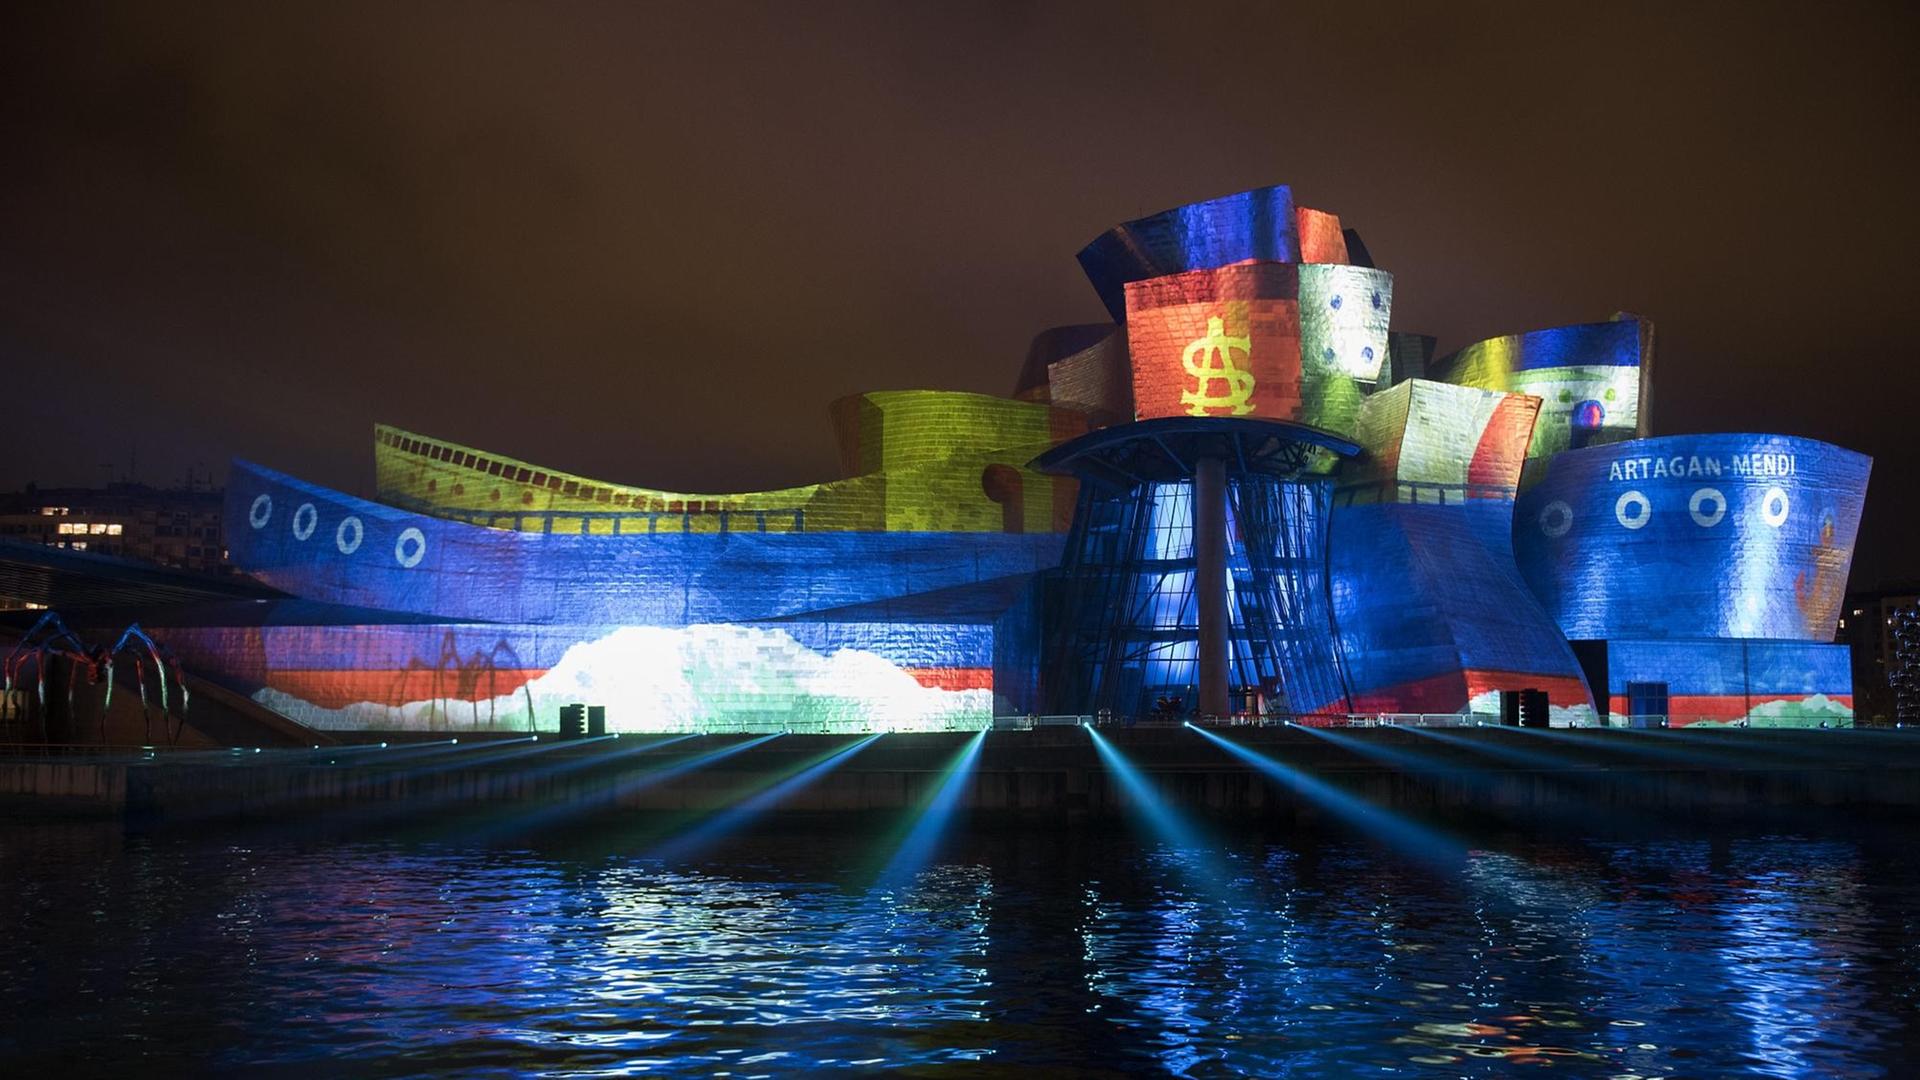 Das Guggenheim-Museum in Bilbao wird im Rahmen des 20-jährigen Museums-Jubiläums bunt angestrahlt.